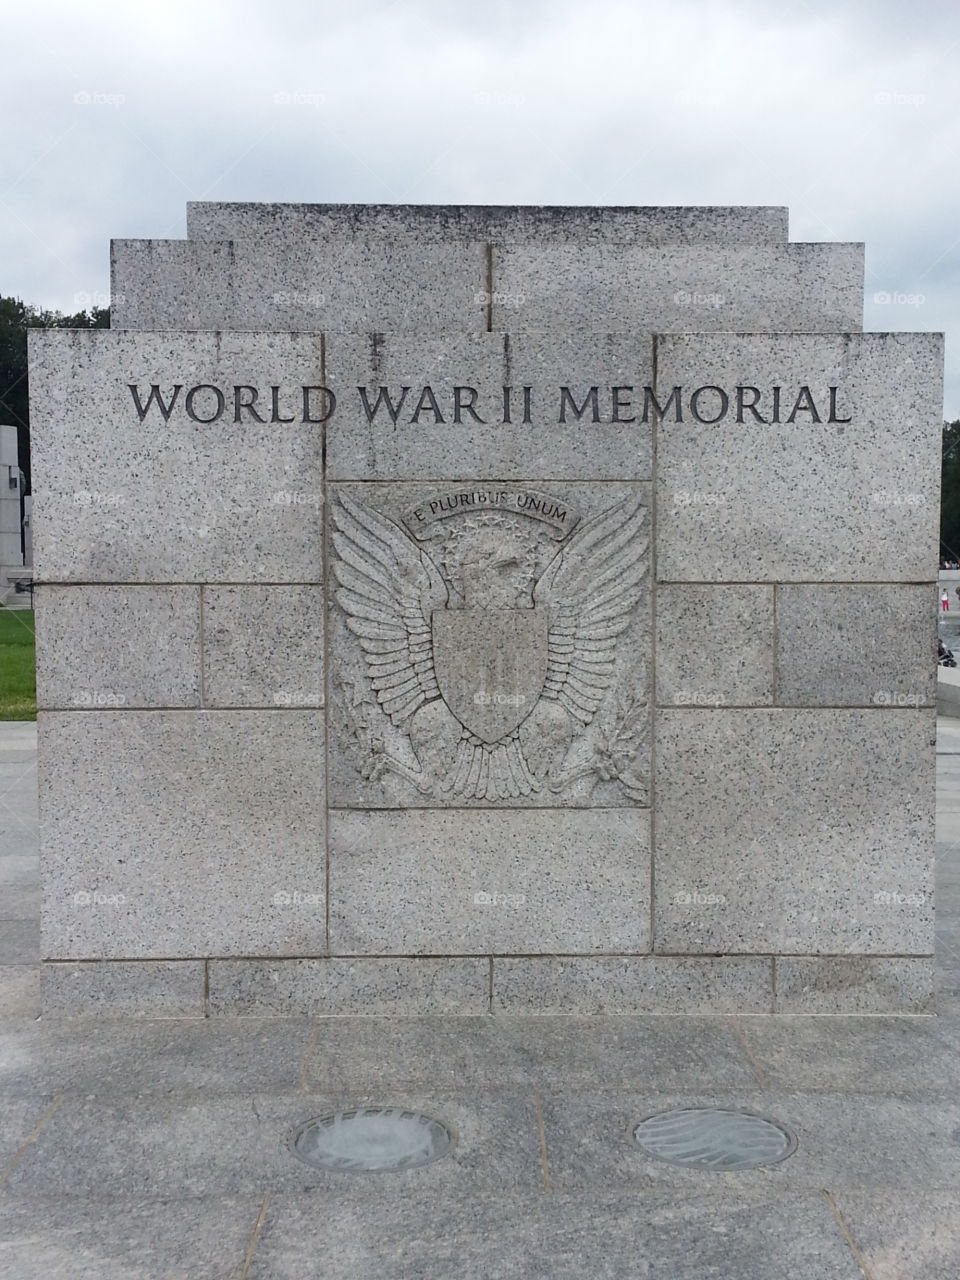 WW2 Memorial Washington DC